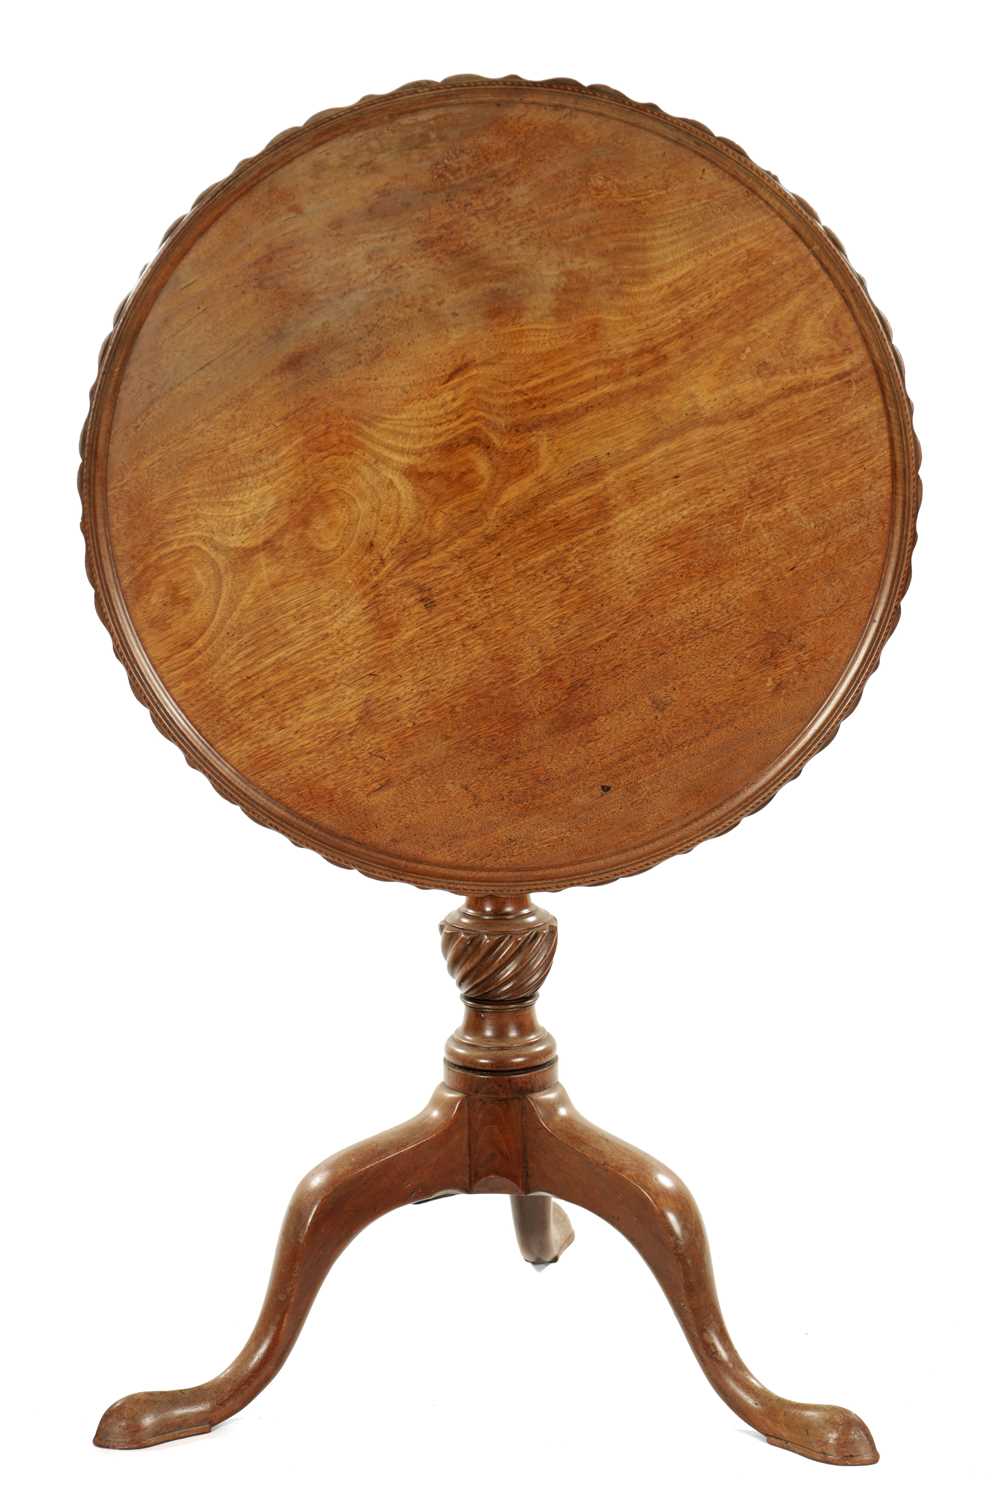 A FINE 18TH CENTURY CIRCULAR WAVY EDGED MAHOGANY TILT-TOP TRIPOD TABLE